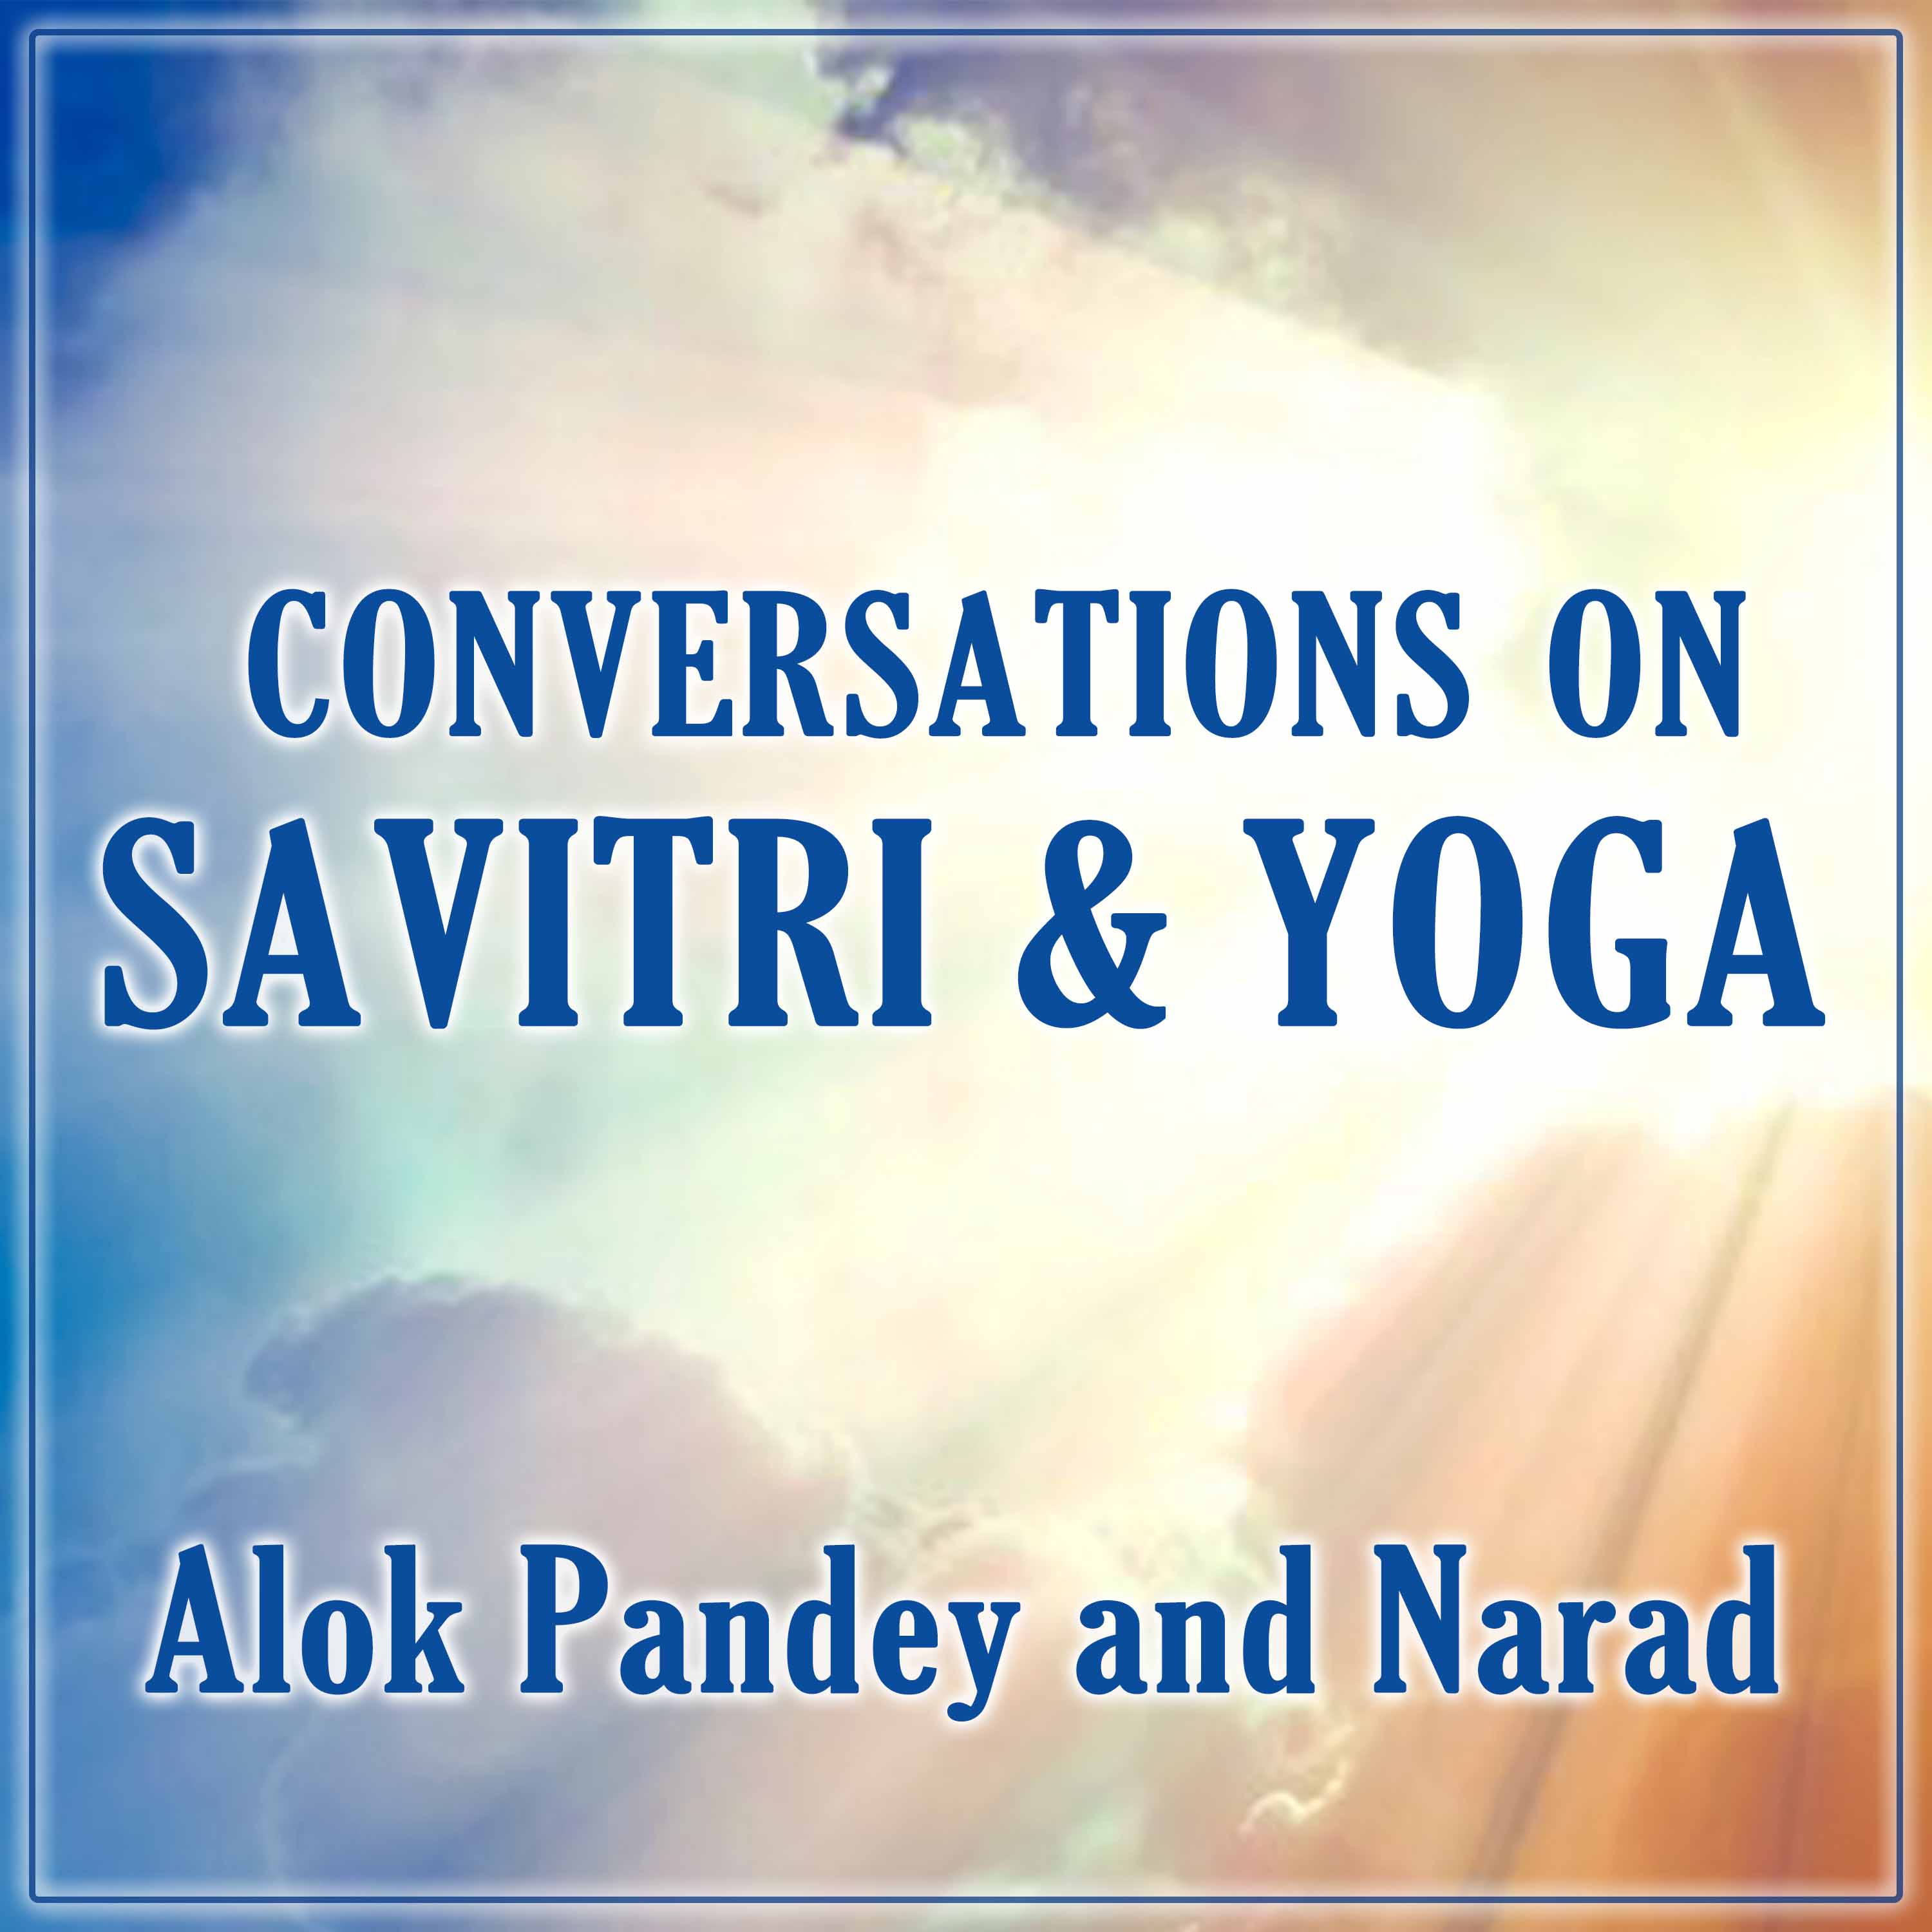 Alok Pandey & Narad on Savitri & Yoga